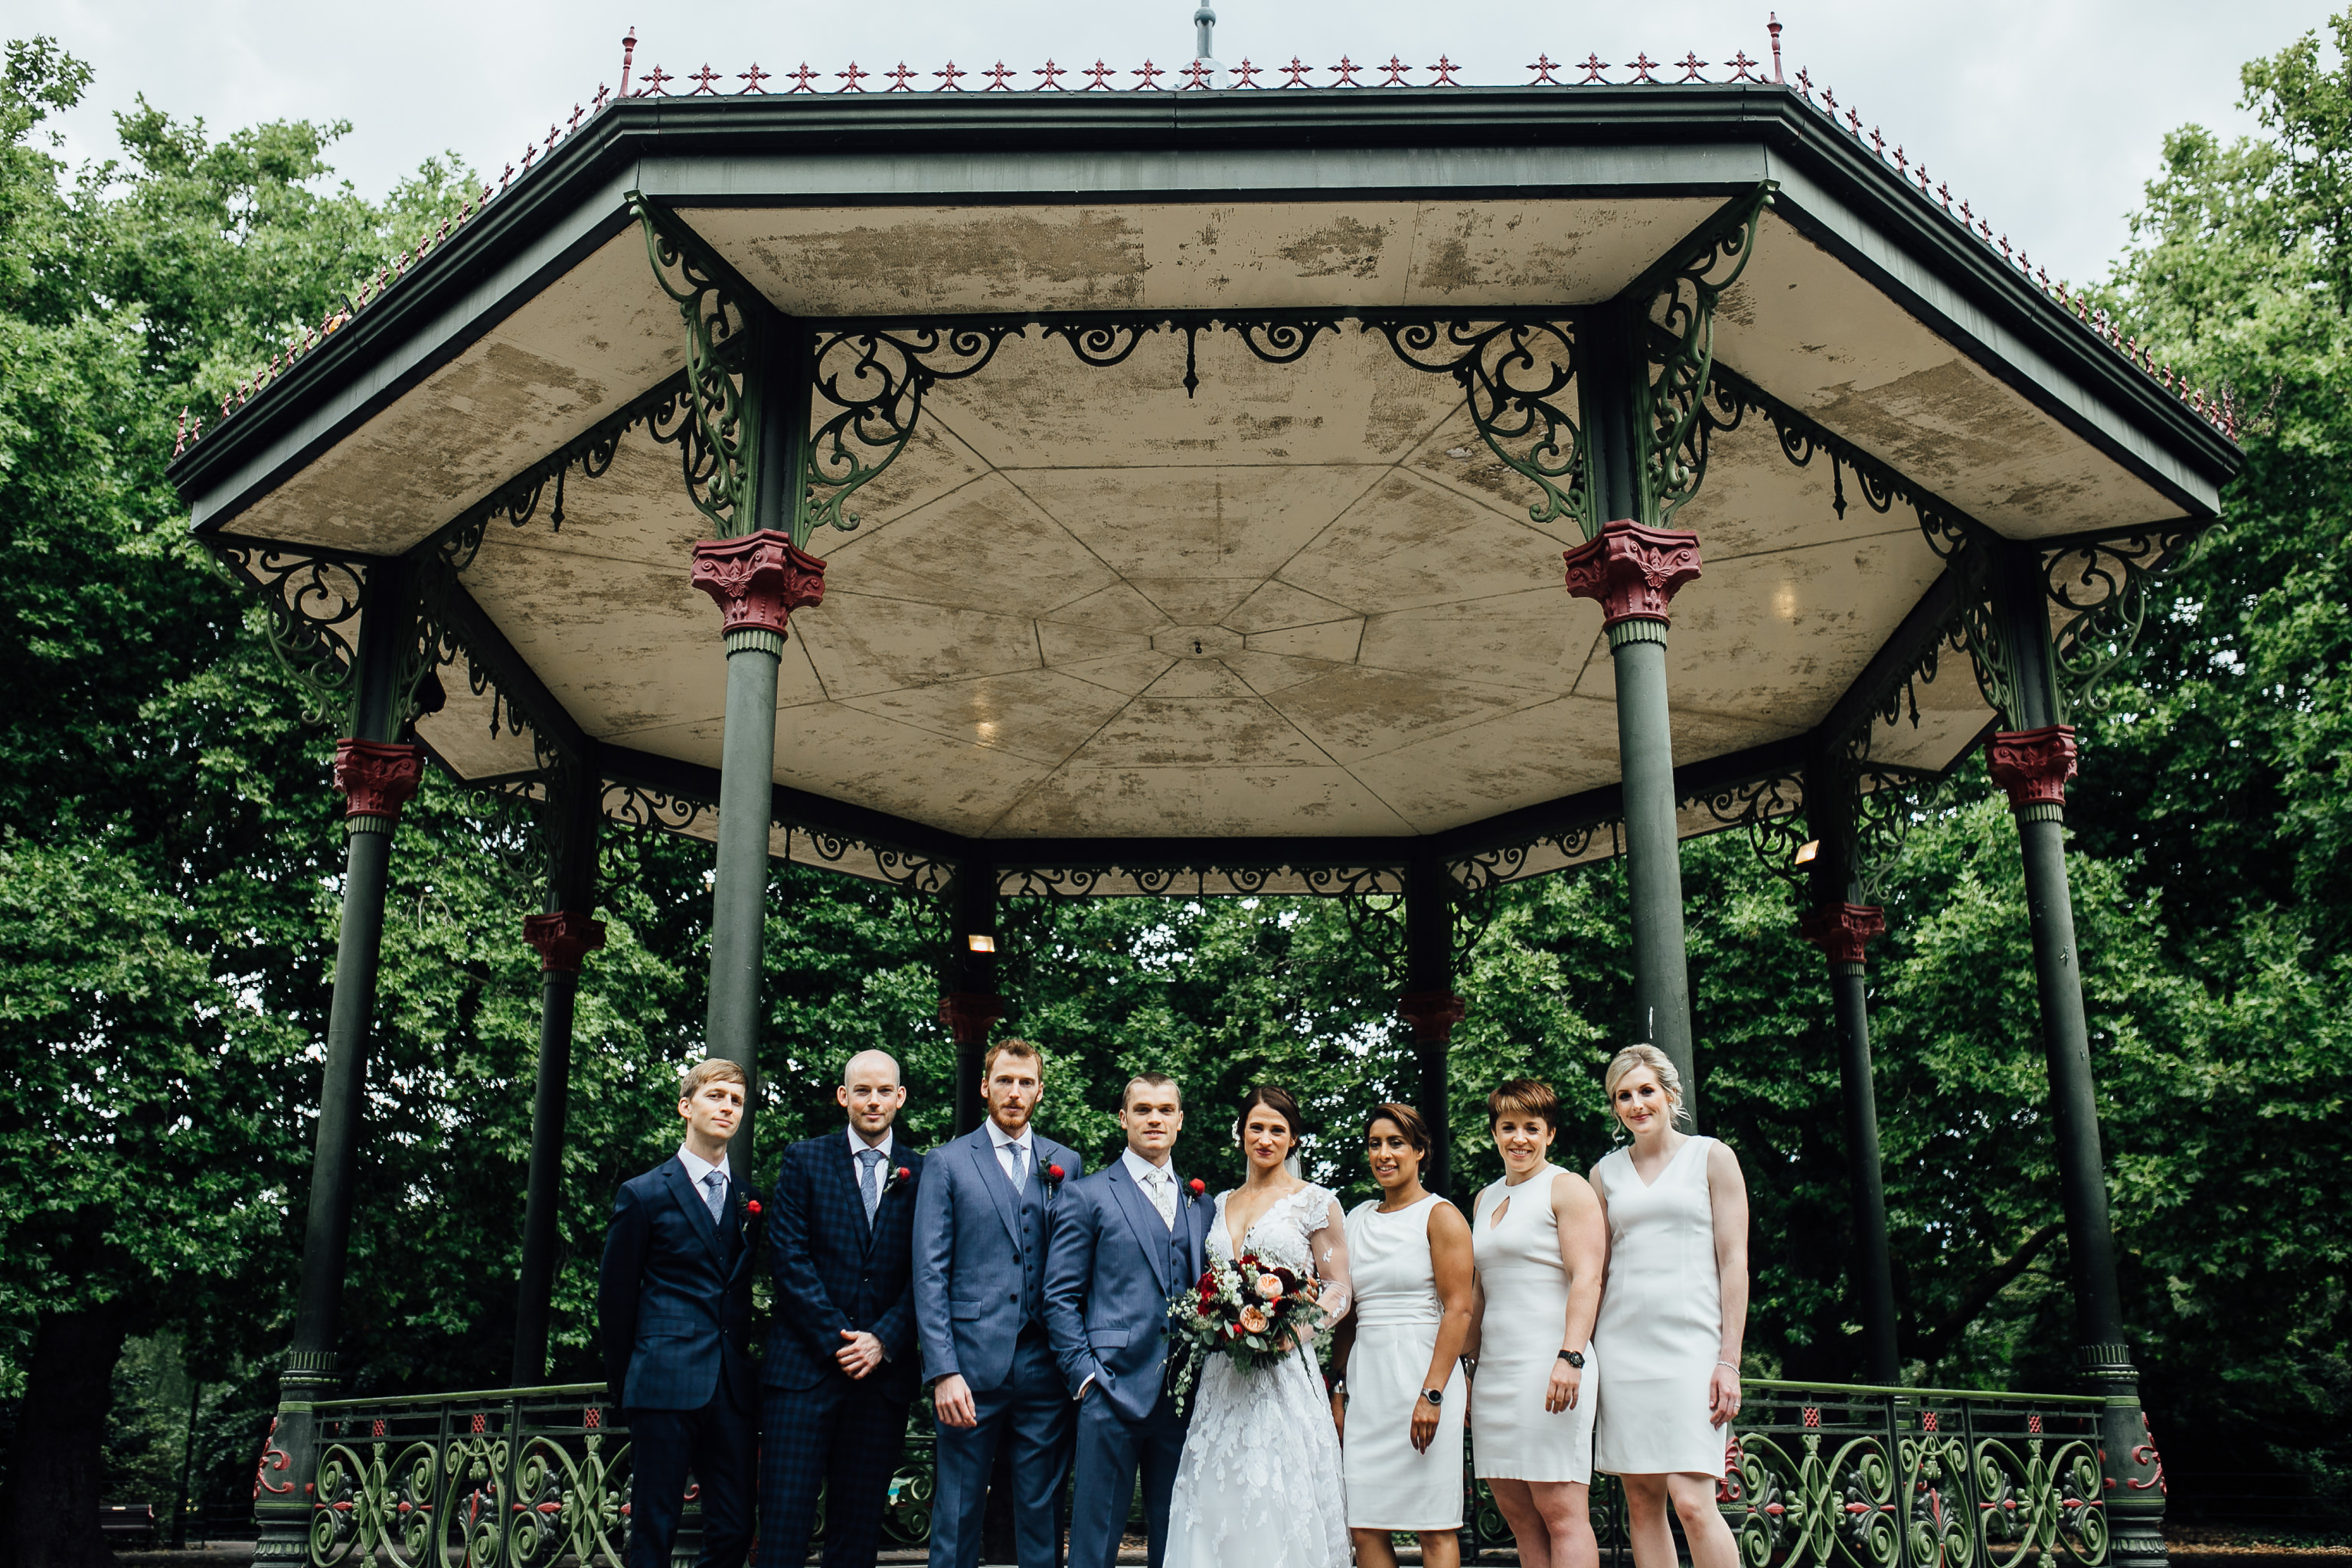 wedding photos at battersea park by london wedding photographer